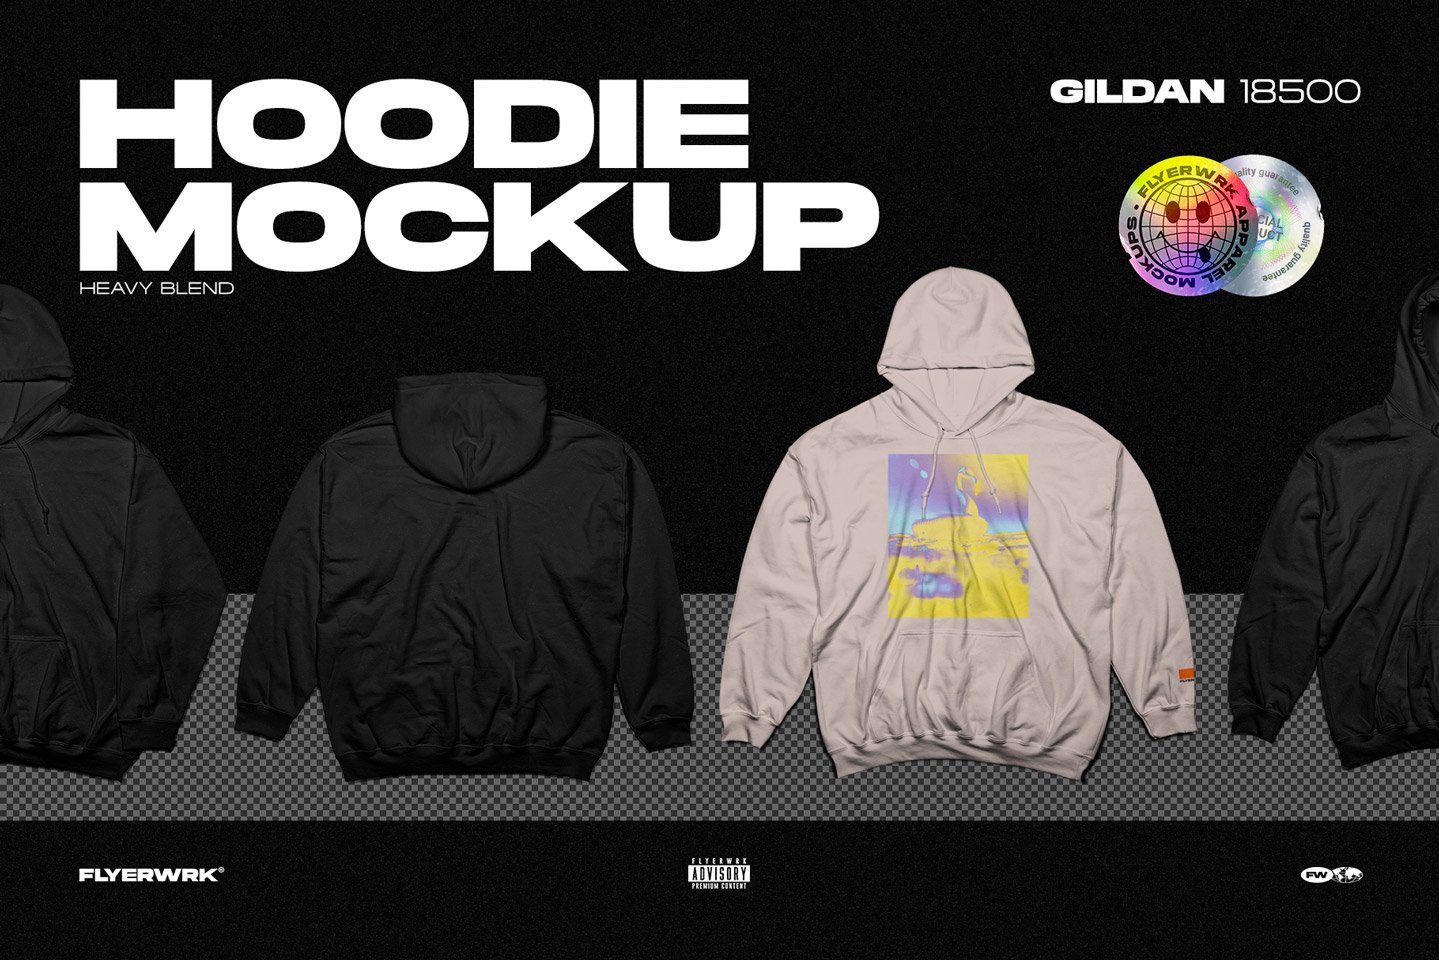 Hoodie Mockup - Gildan 18500 cover image.